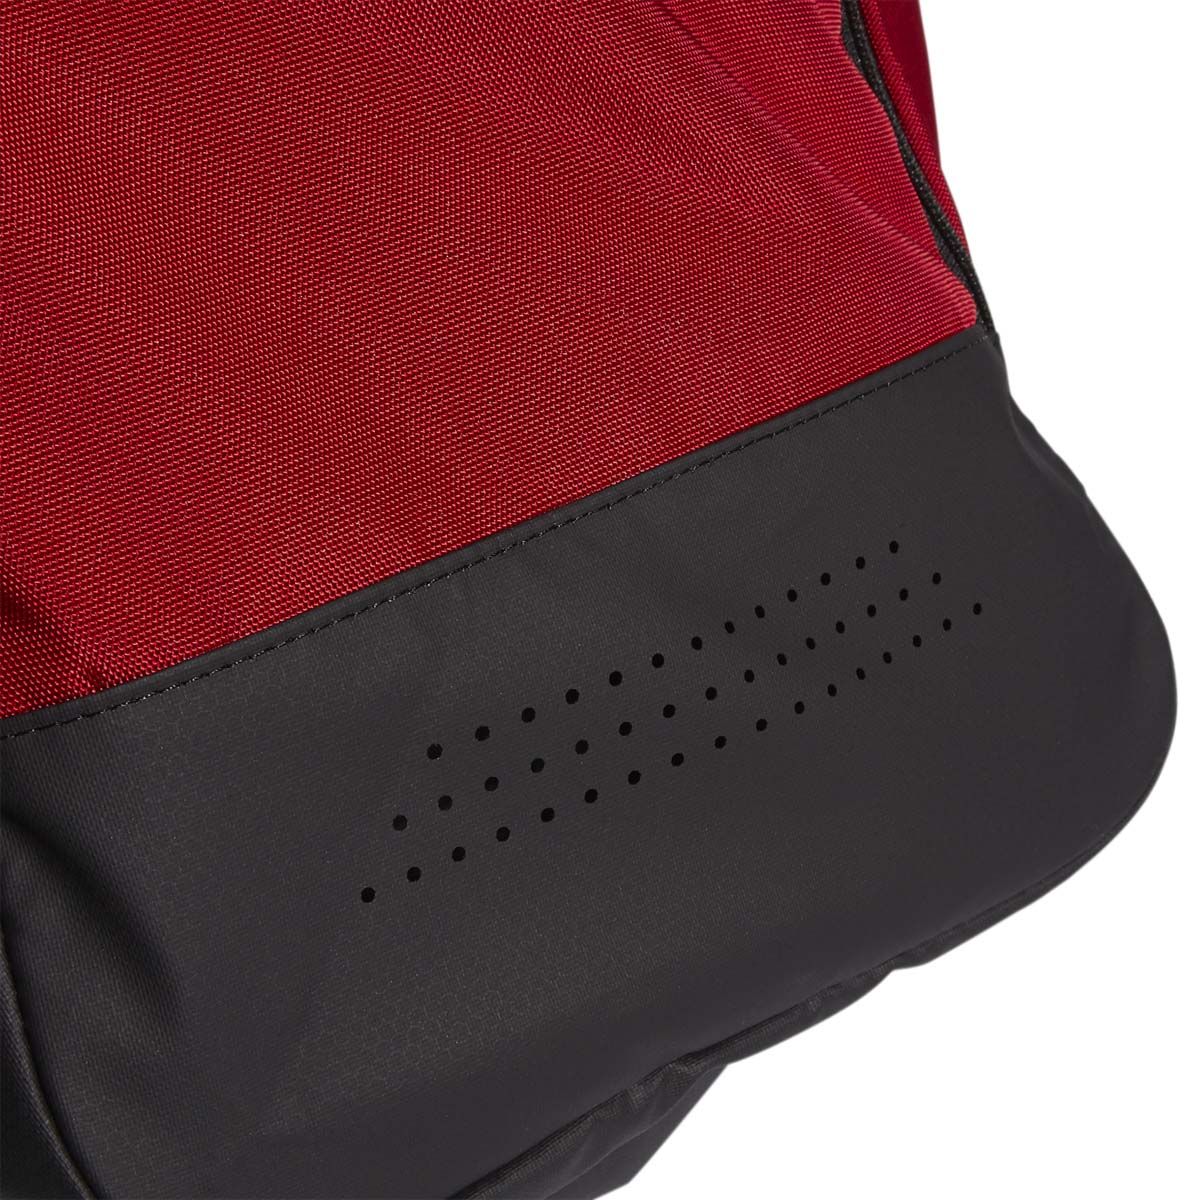 Adidas Defender IV Small Duffel Bag – Deportes Salazar